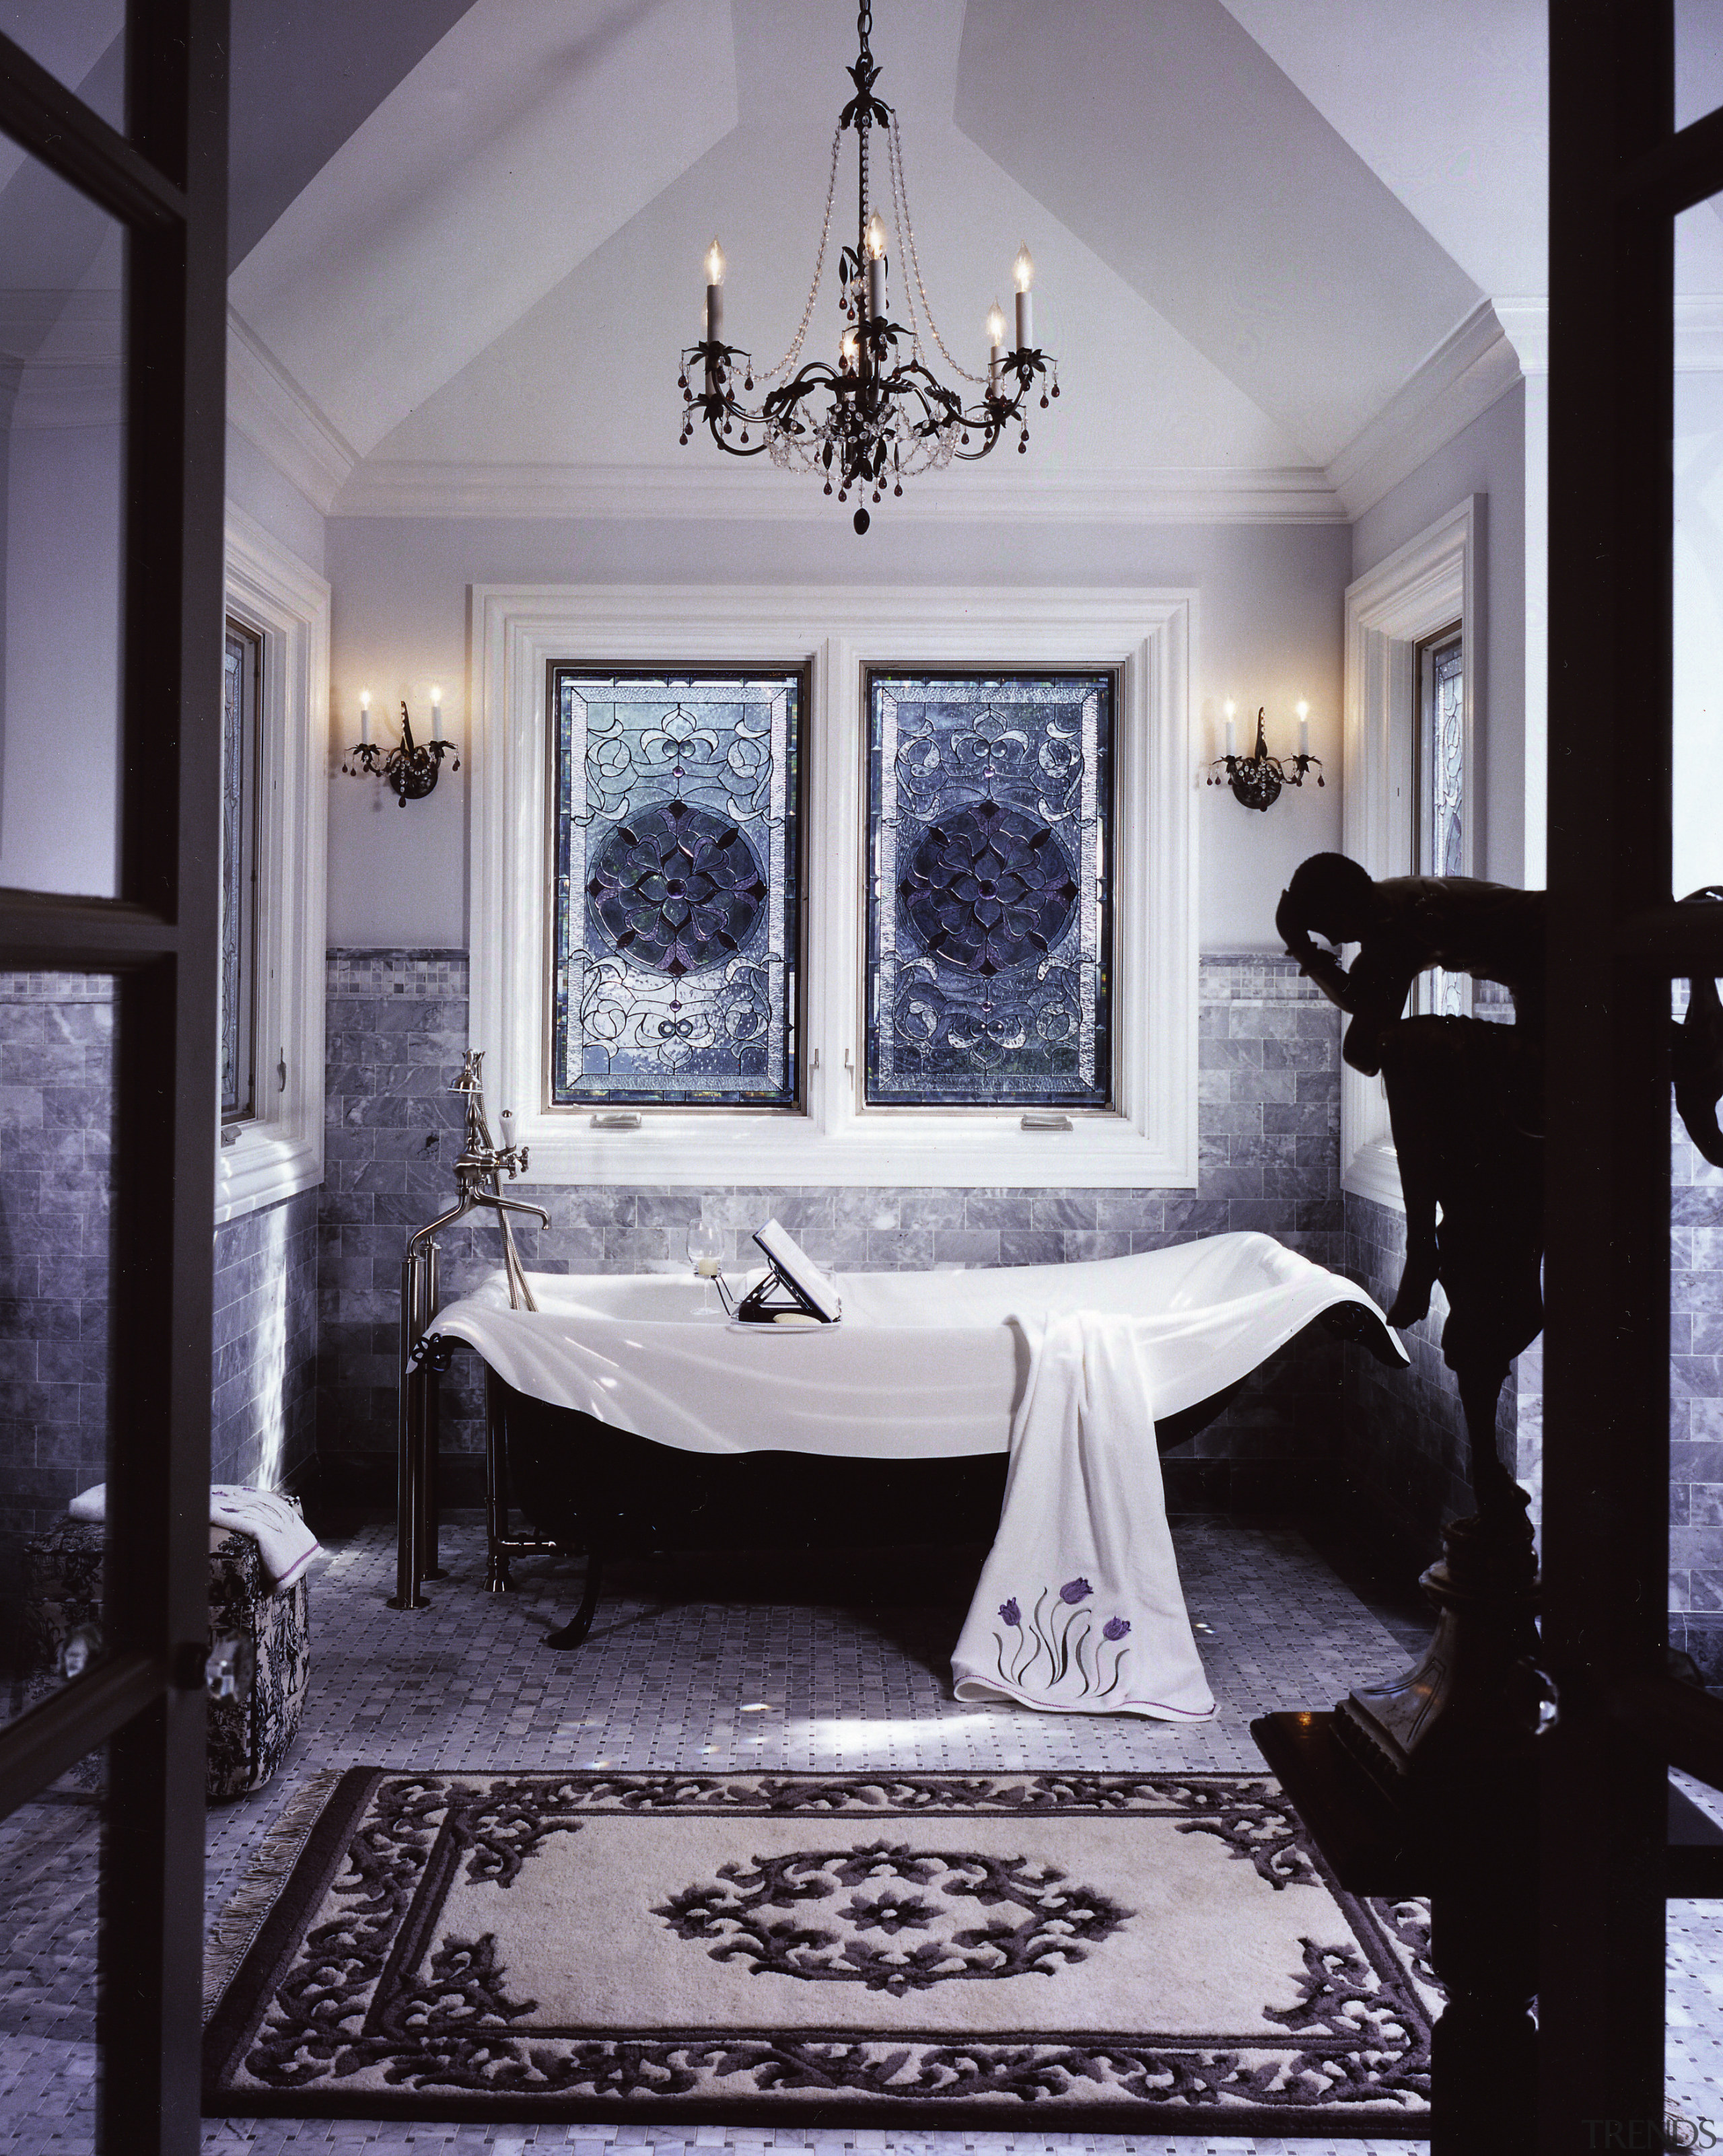 View of bathroom - View of bathroom - bathroom, ceiling, floor, furniture, home, interior design, living room, room, window, gray, black